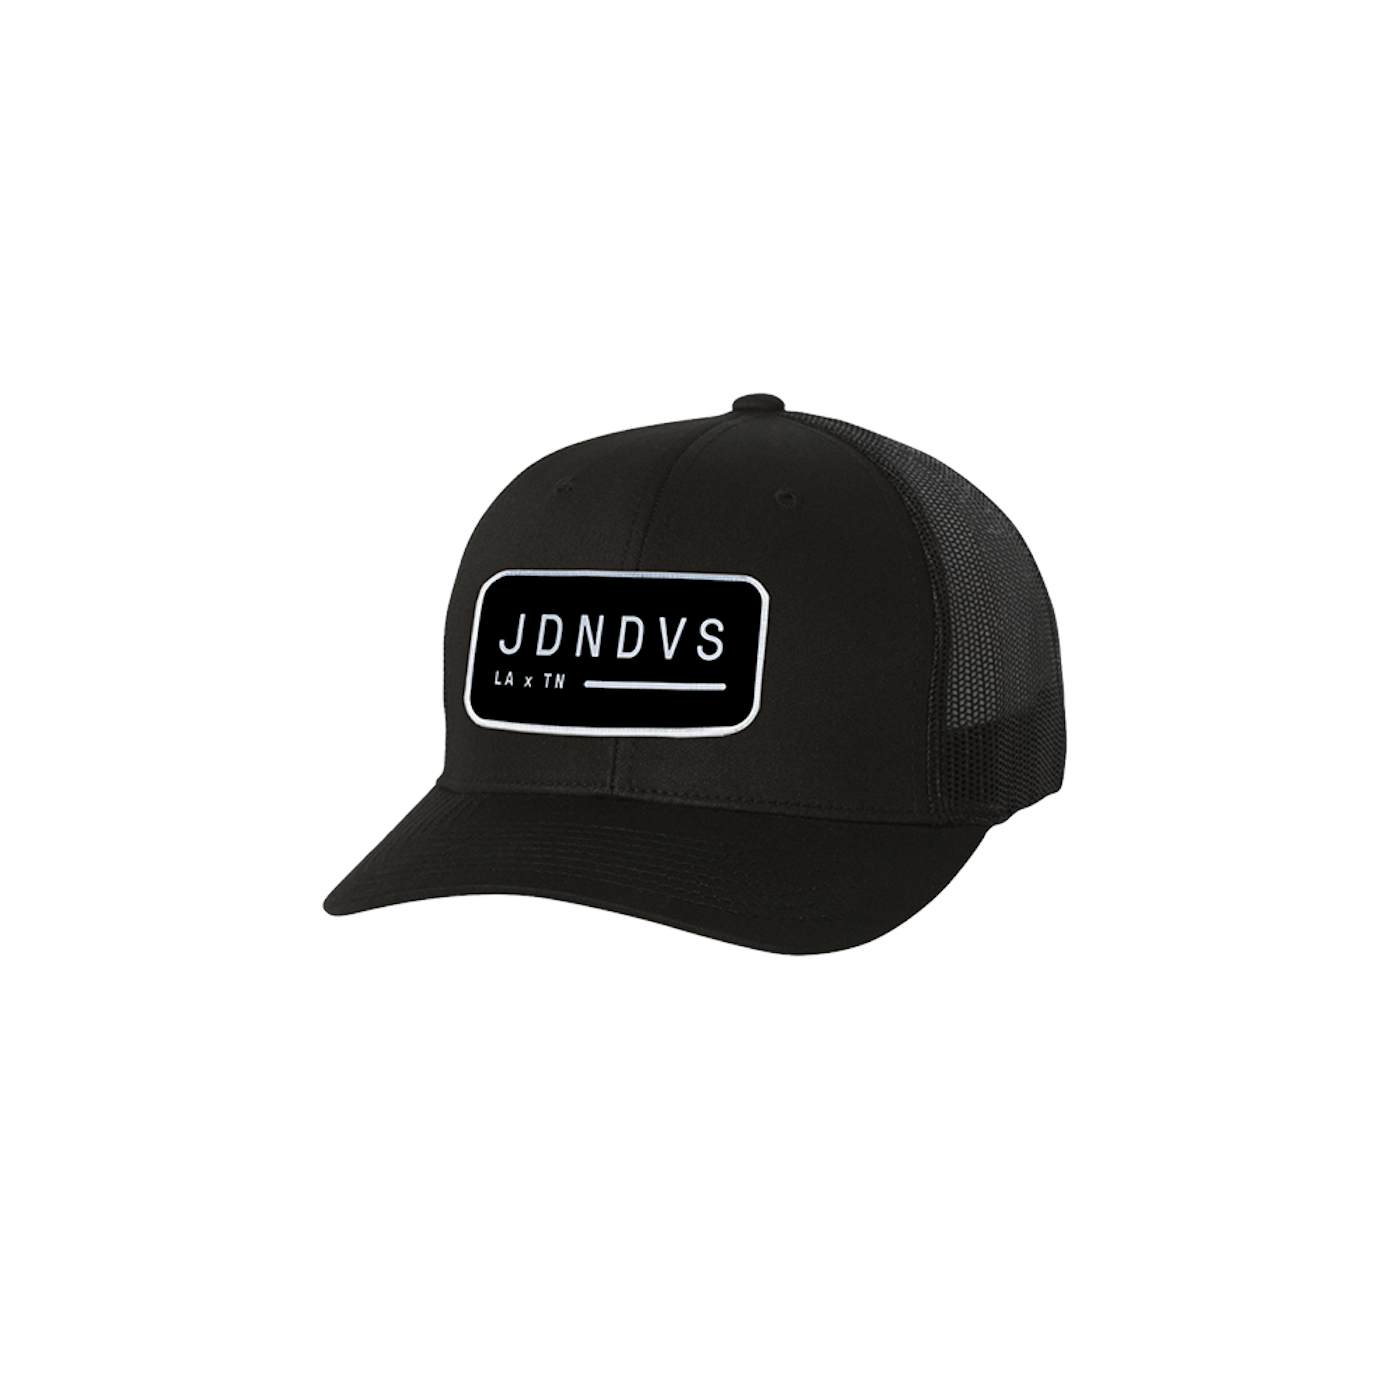 Jordan Davis Black JDNDVS Patch Hat